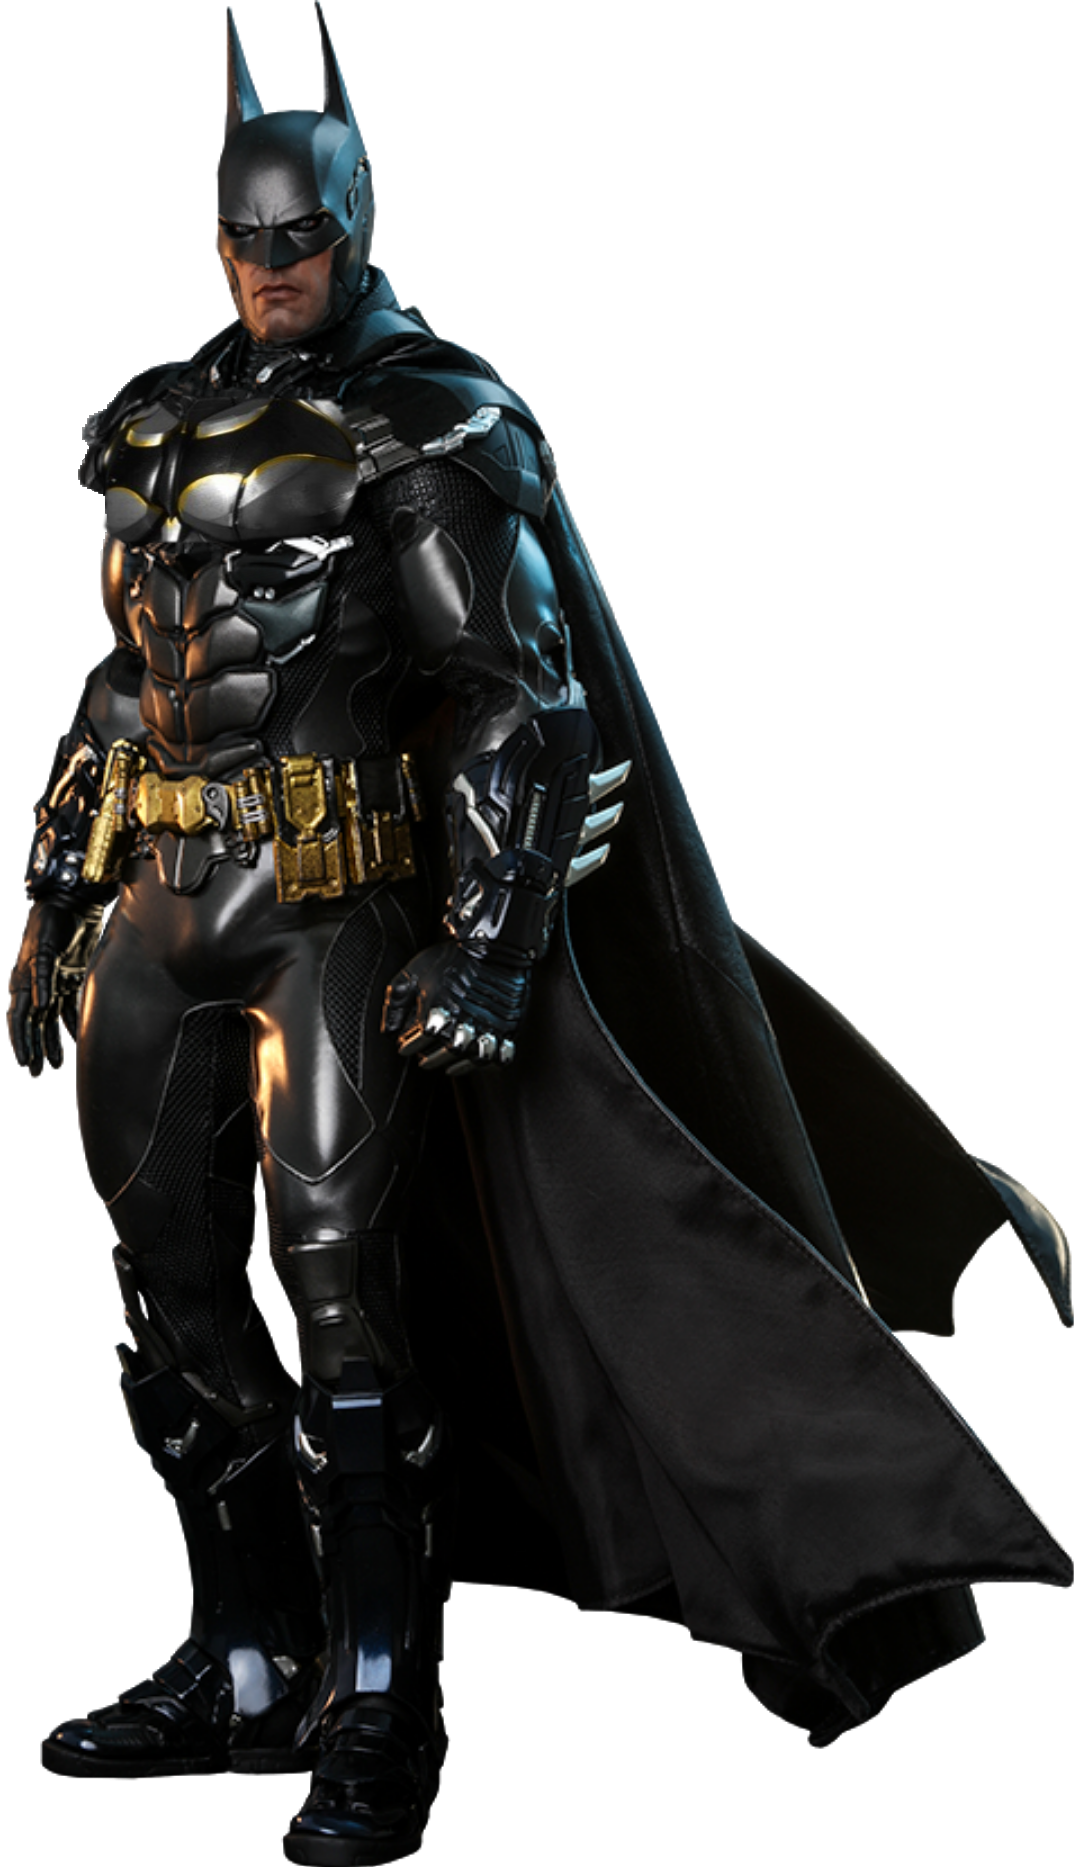 Batman Arkham Knight How To Get Prestige Suit Prestige Batman Recolored PNG by jta2k6v2 on DeviantArt